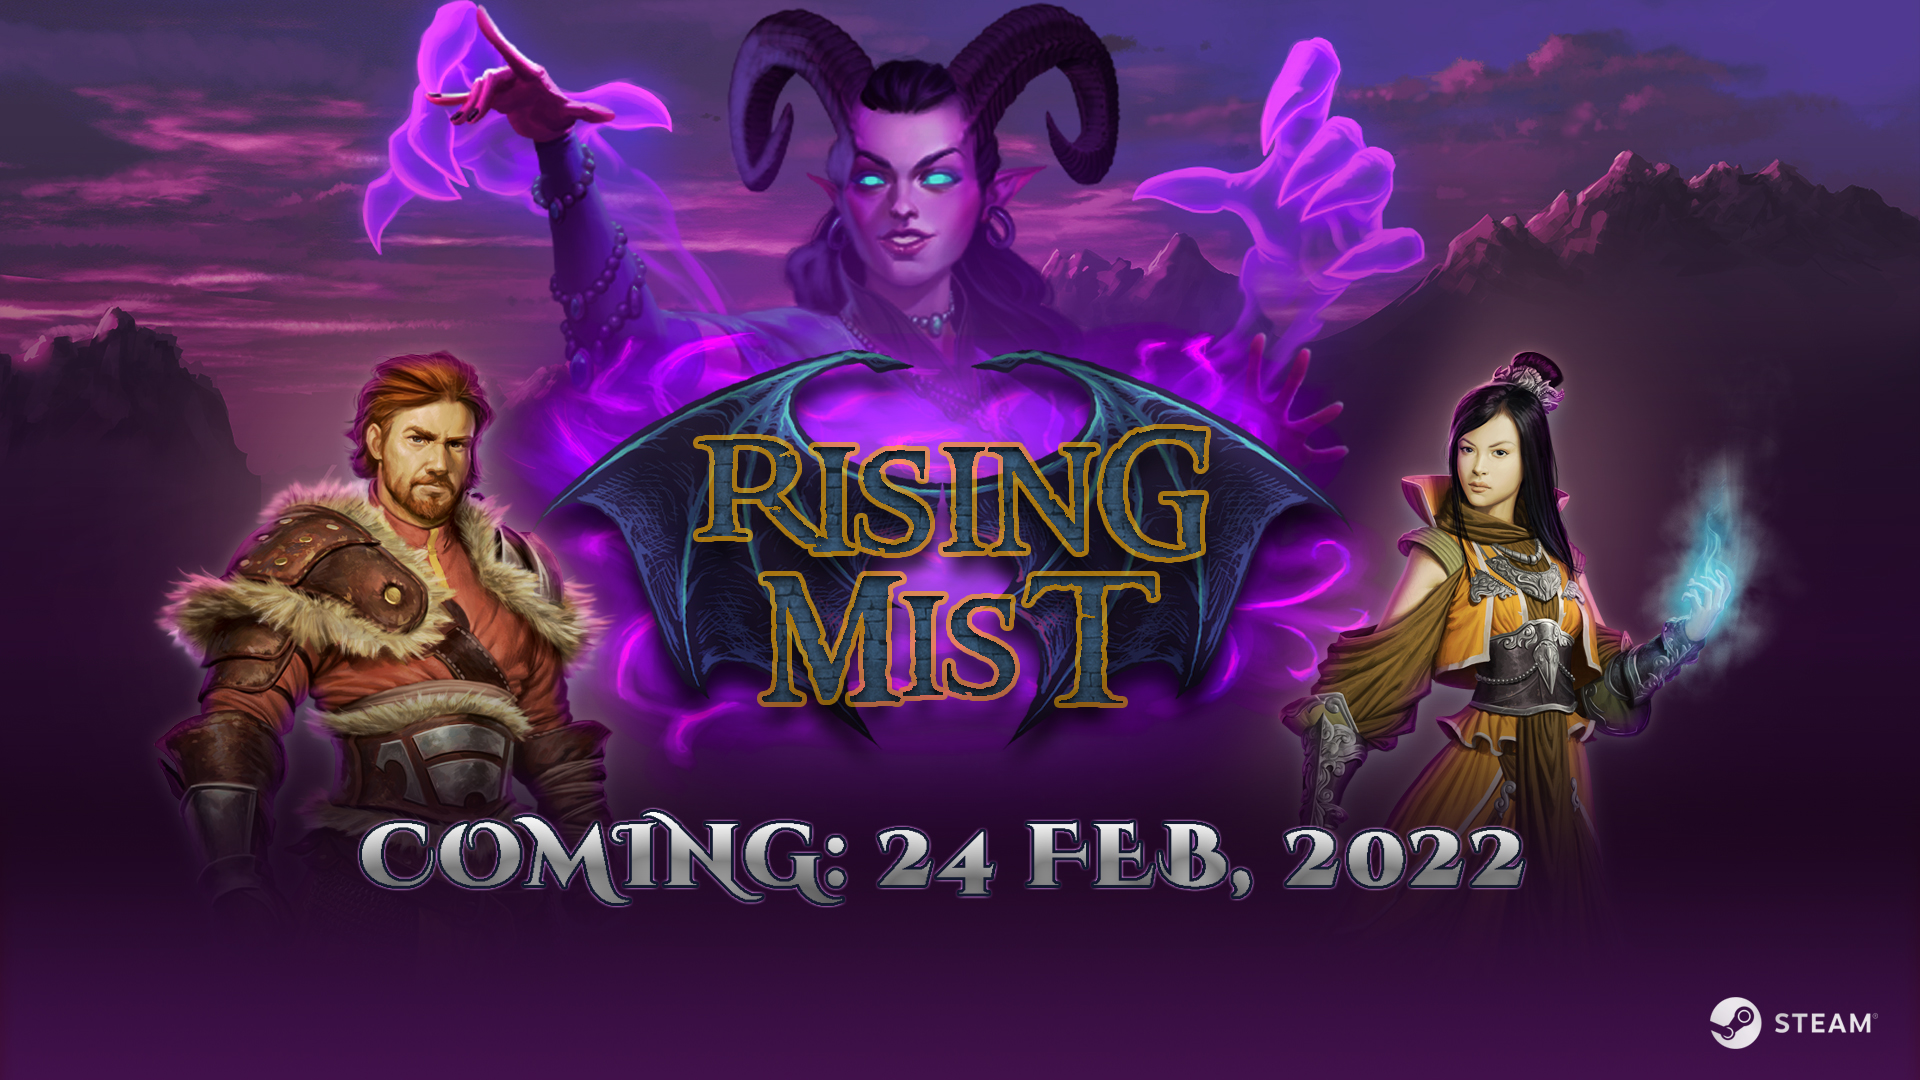 Rising Mist coming 24 Feb, 2022